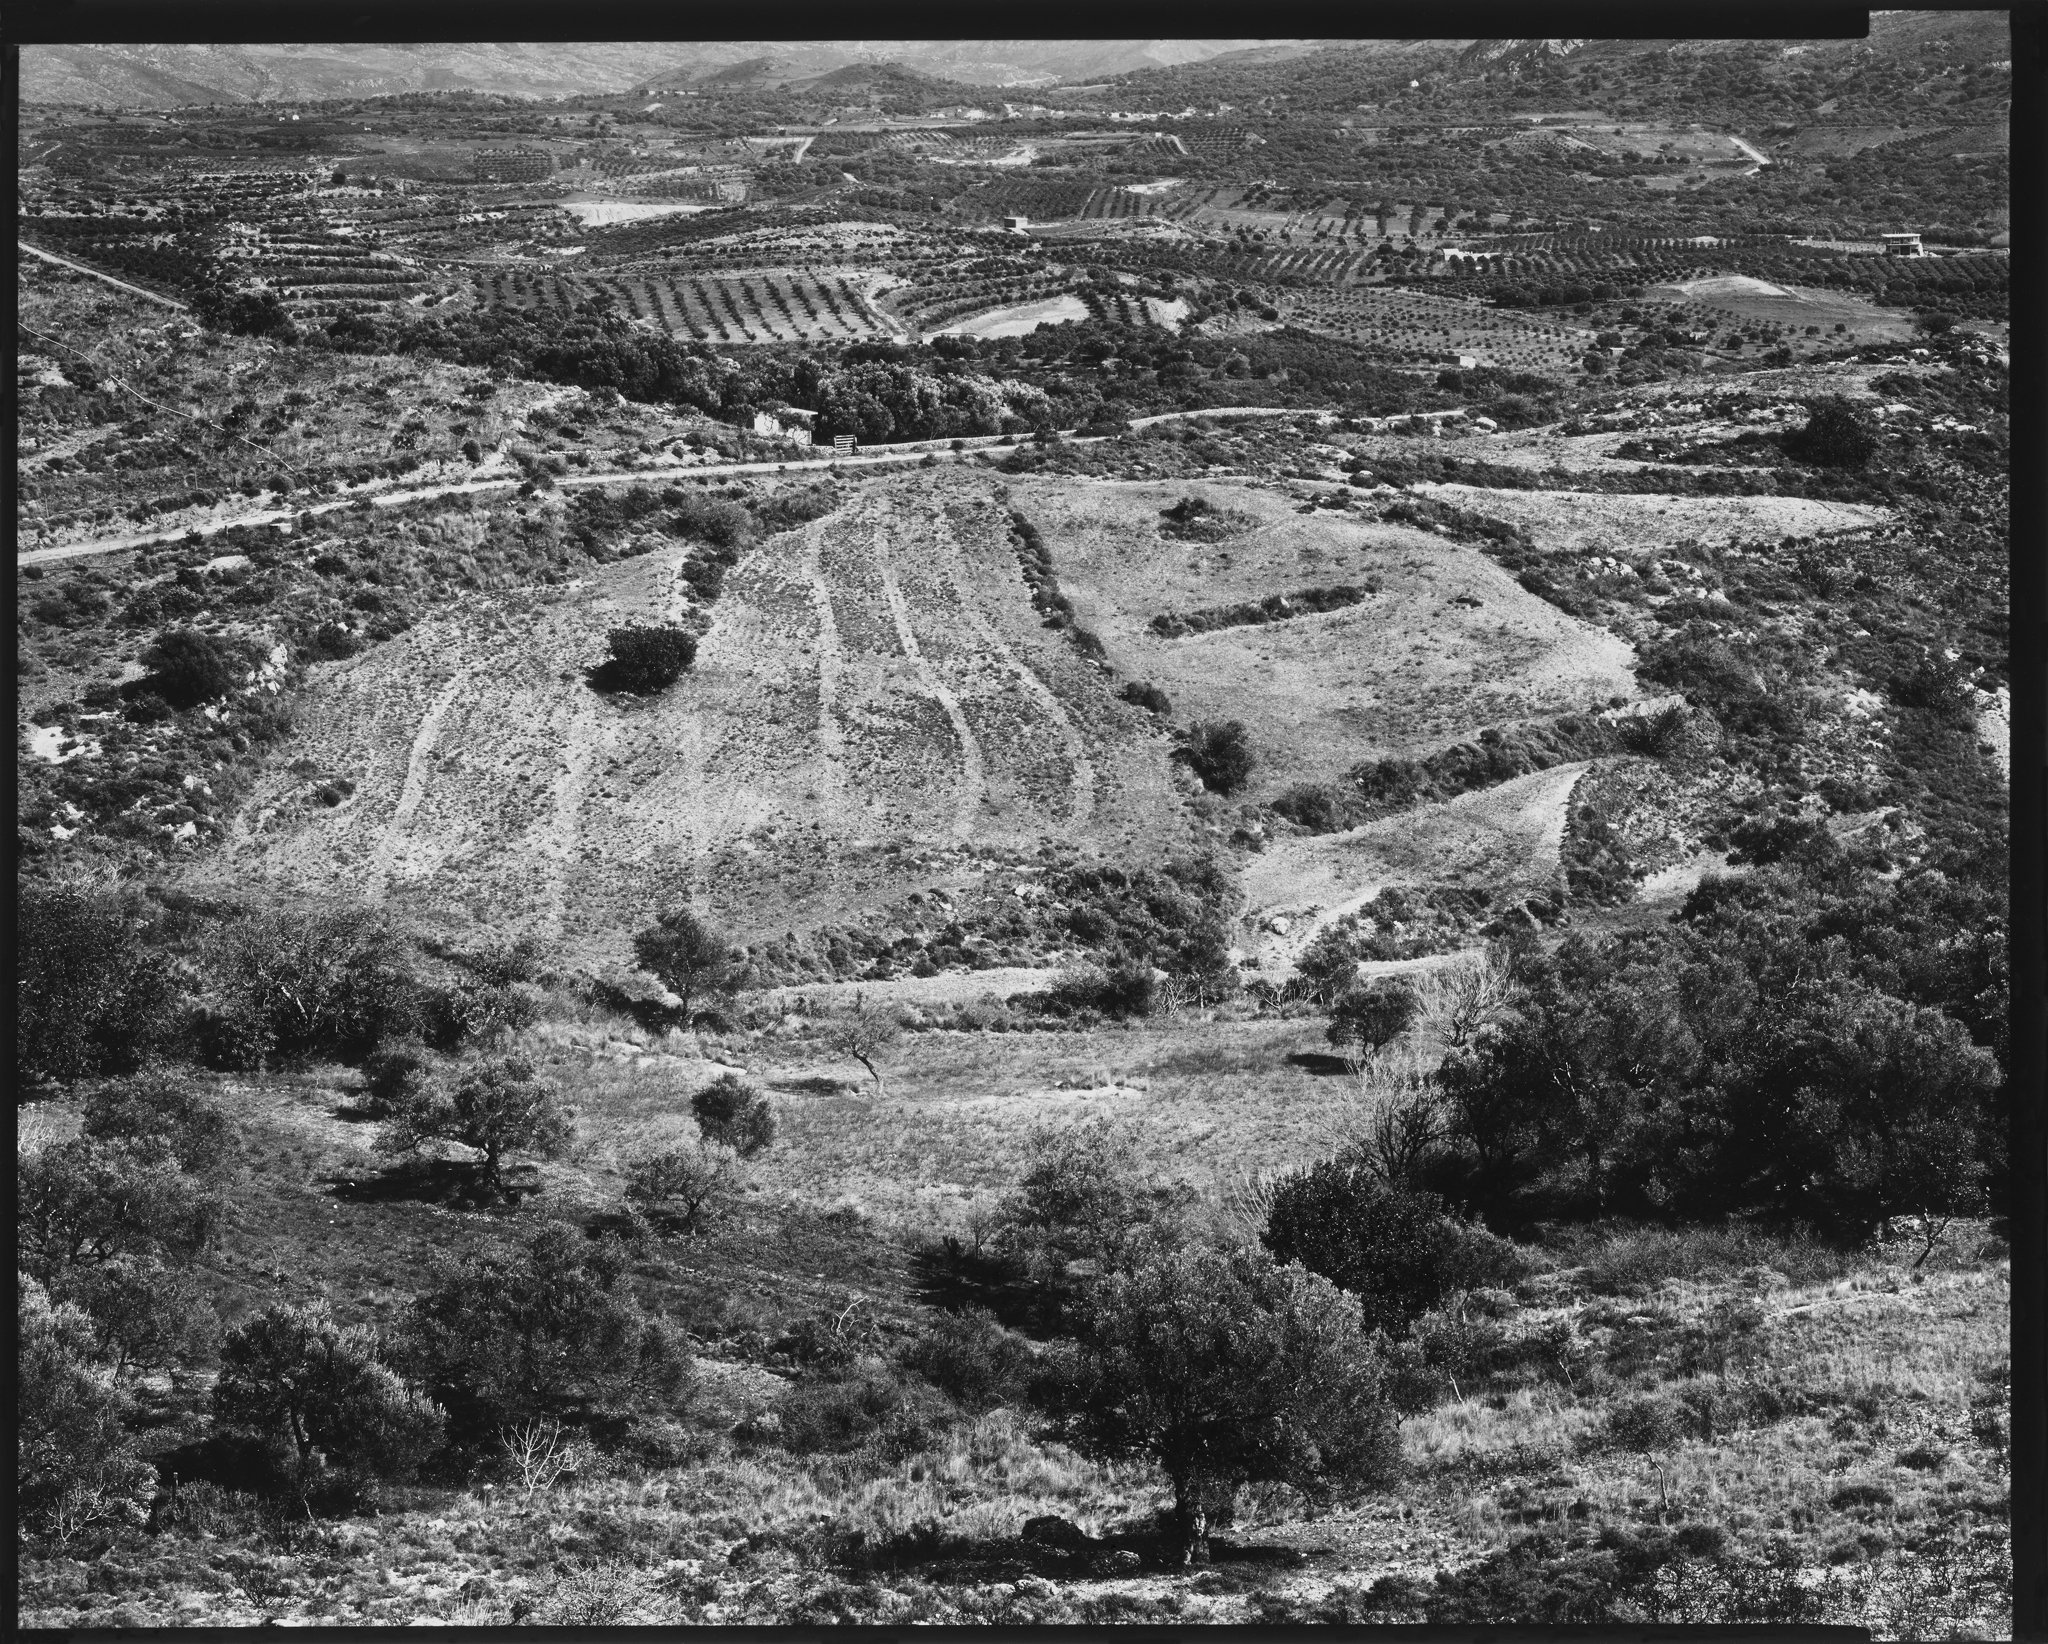 Greek Landscapes Portfolio_Farm Fields near Plakias, Crete_1982 © Nick  Merrick.jpg